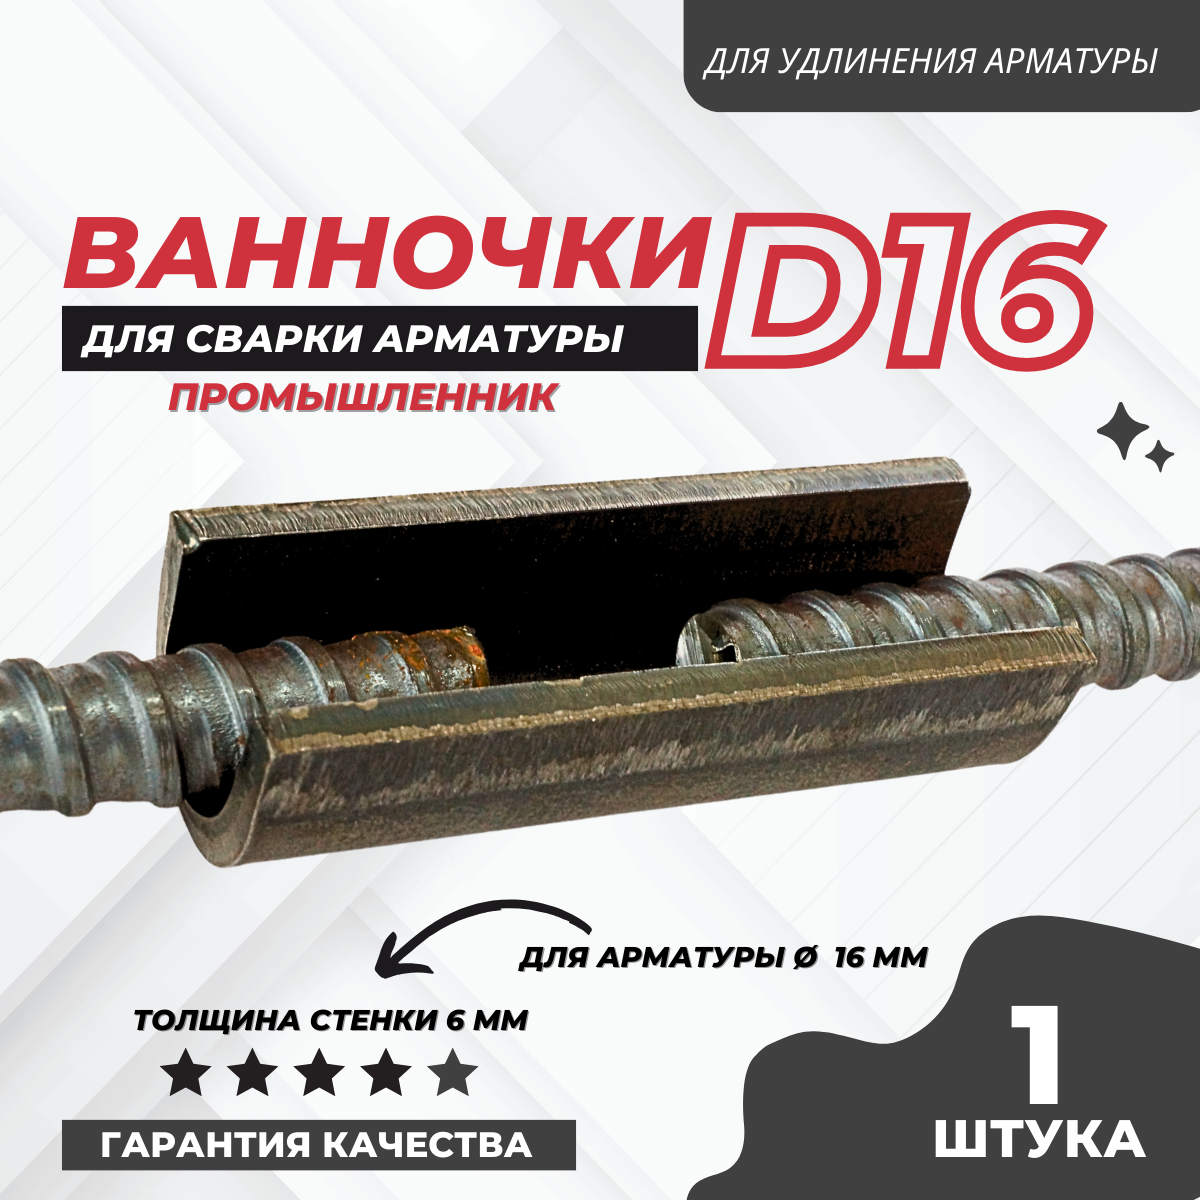 Ванночка для сварки арматуры Промышленник D16 скоба-накладка